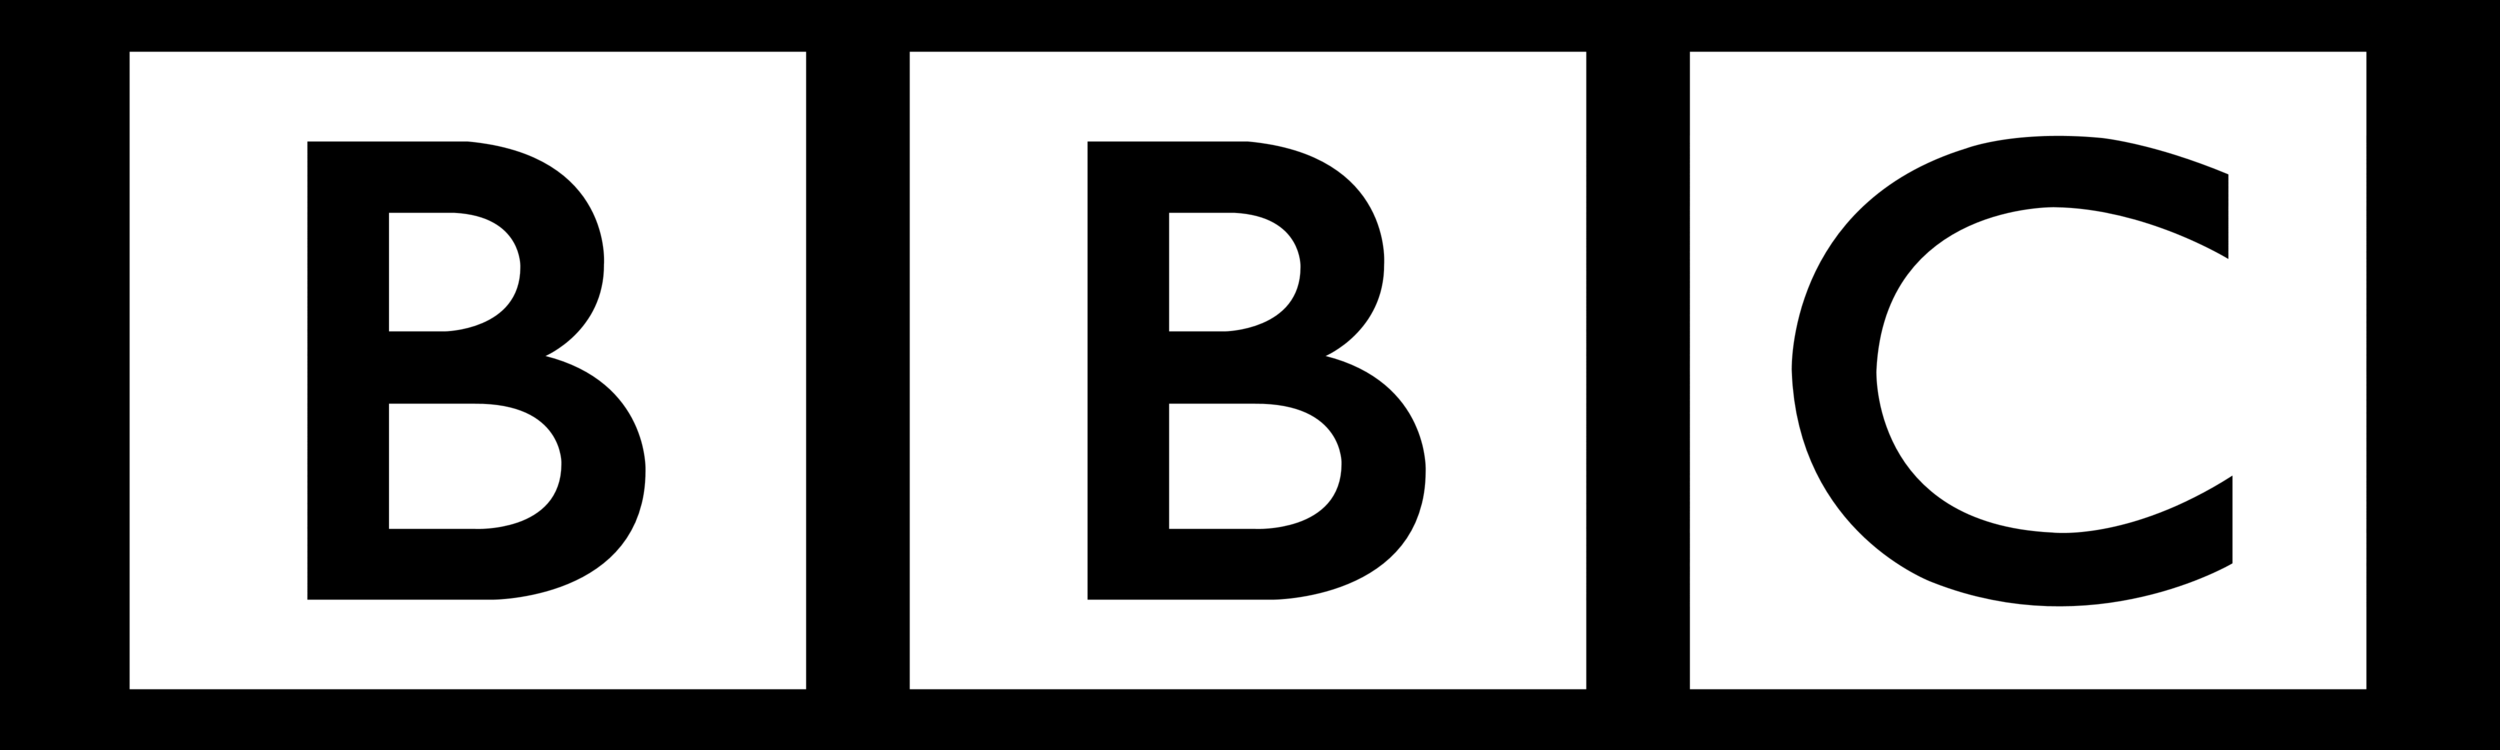 BBC_logo_black_background.png